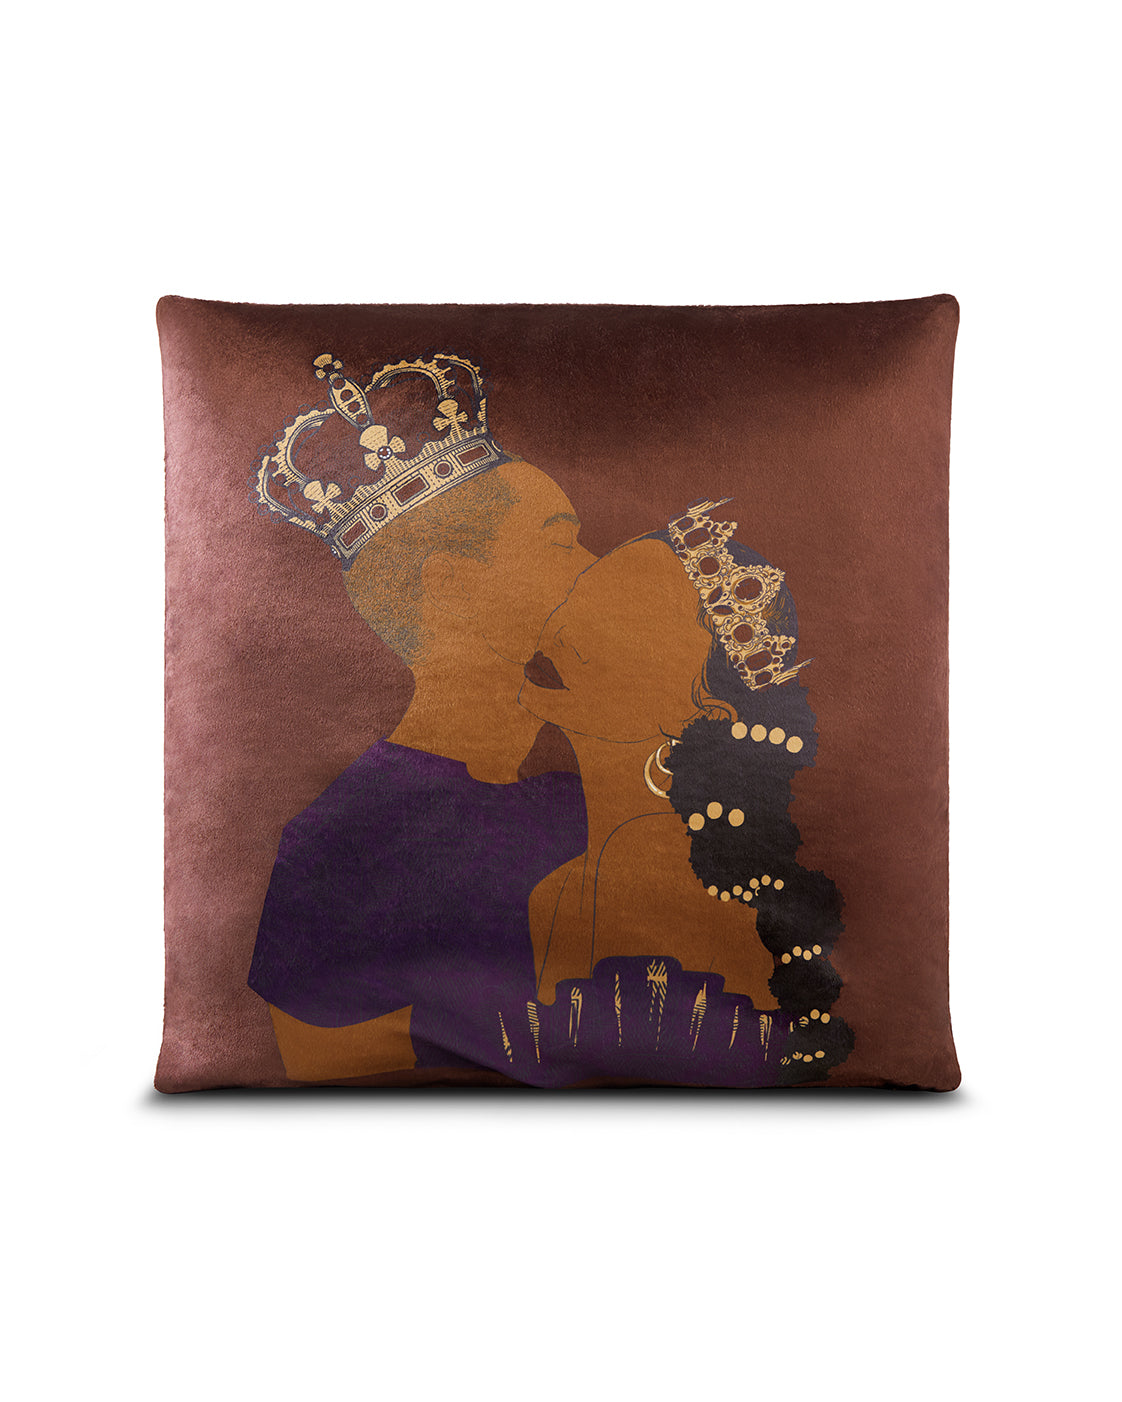 King & Queen Decorative Pillow